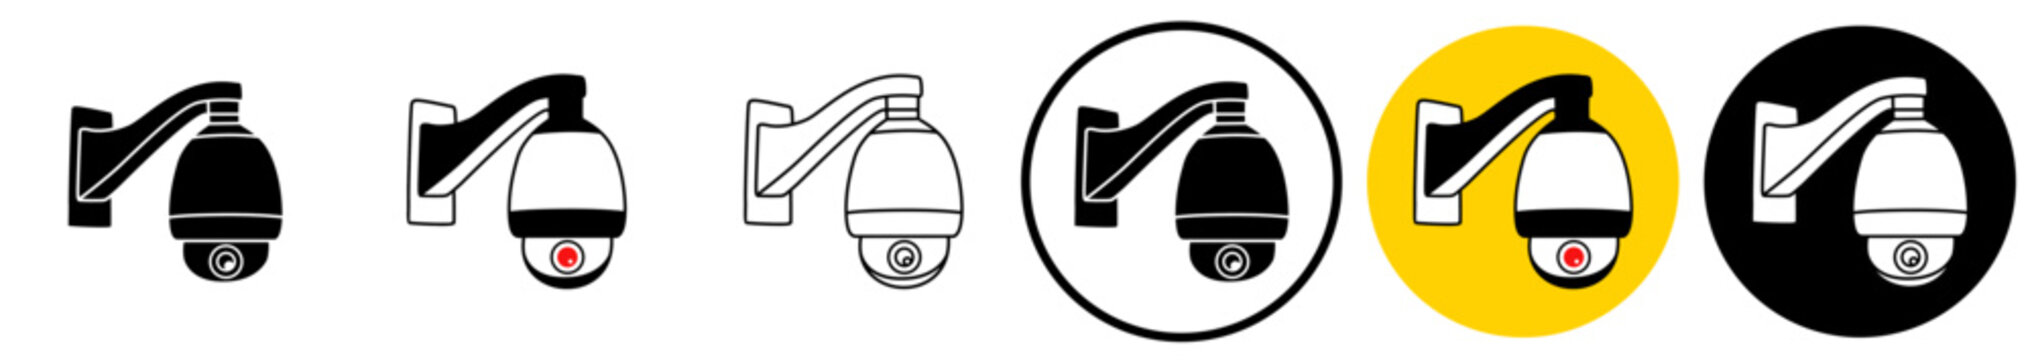 set Modern public CCTV icon sign. Street security camera logo design vector illustrations